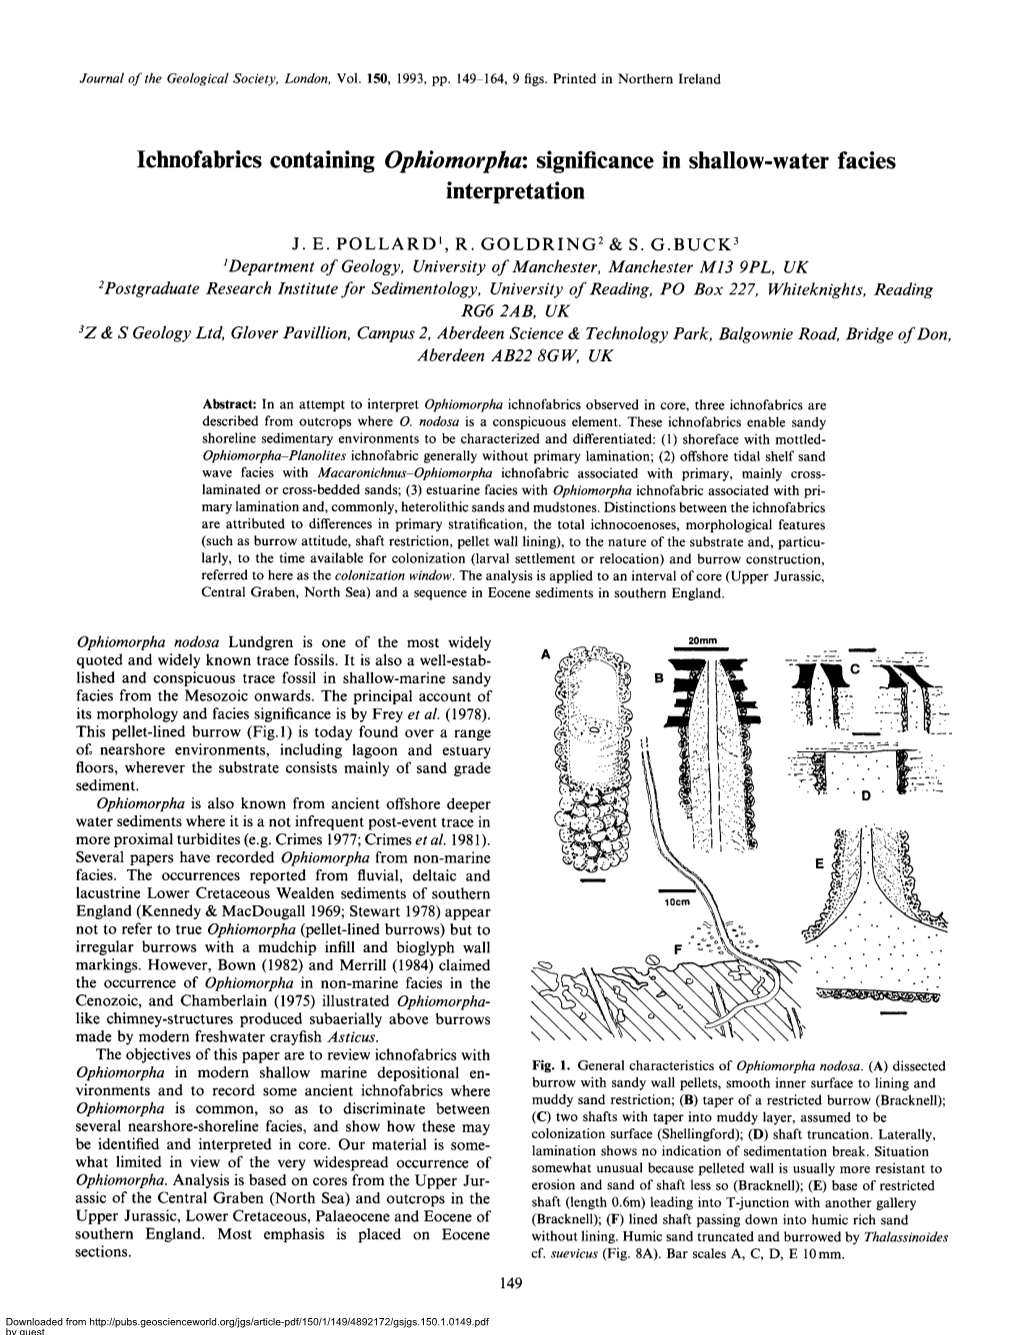 Ichnofabrics Containing Ophiomorpha: Significance in Shallow-Water Facies Interpretation